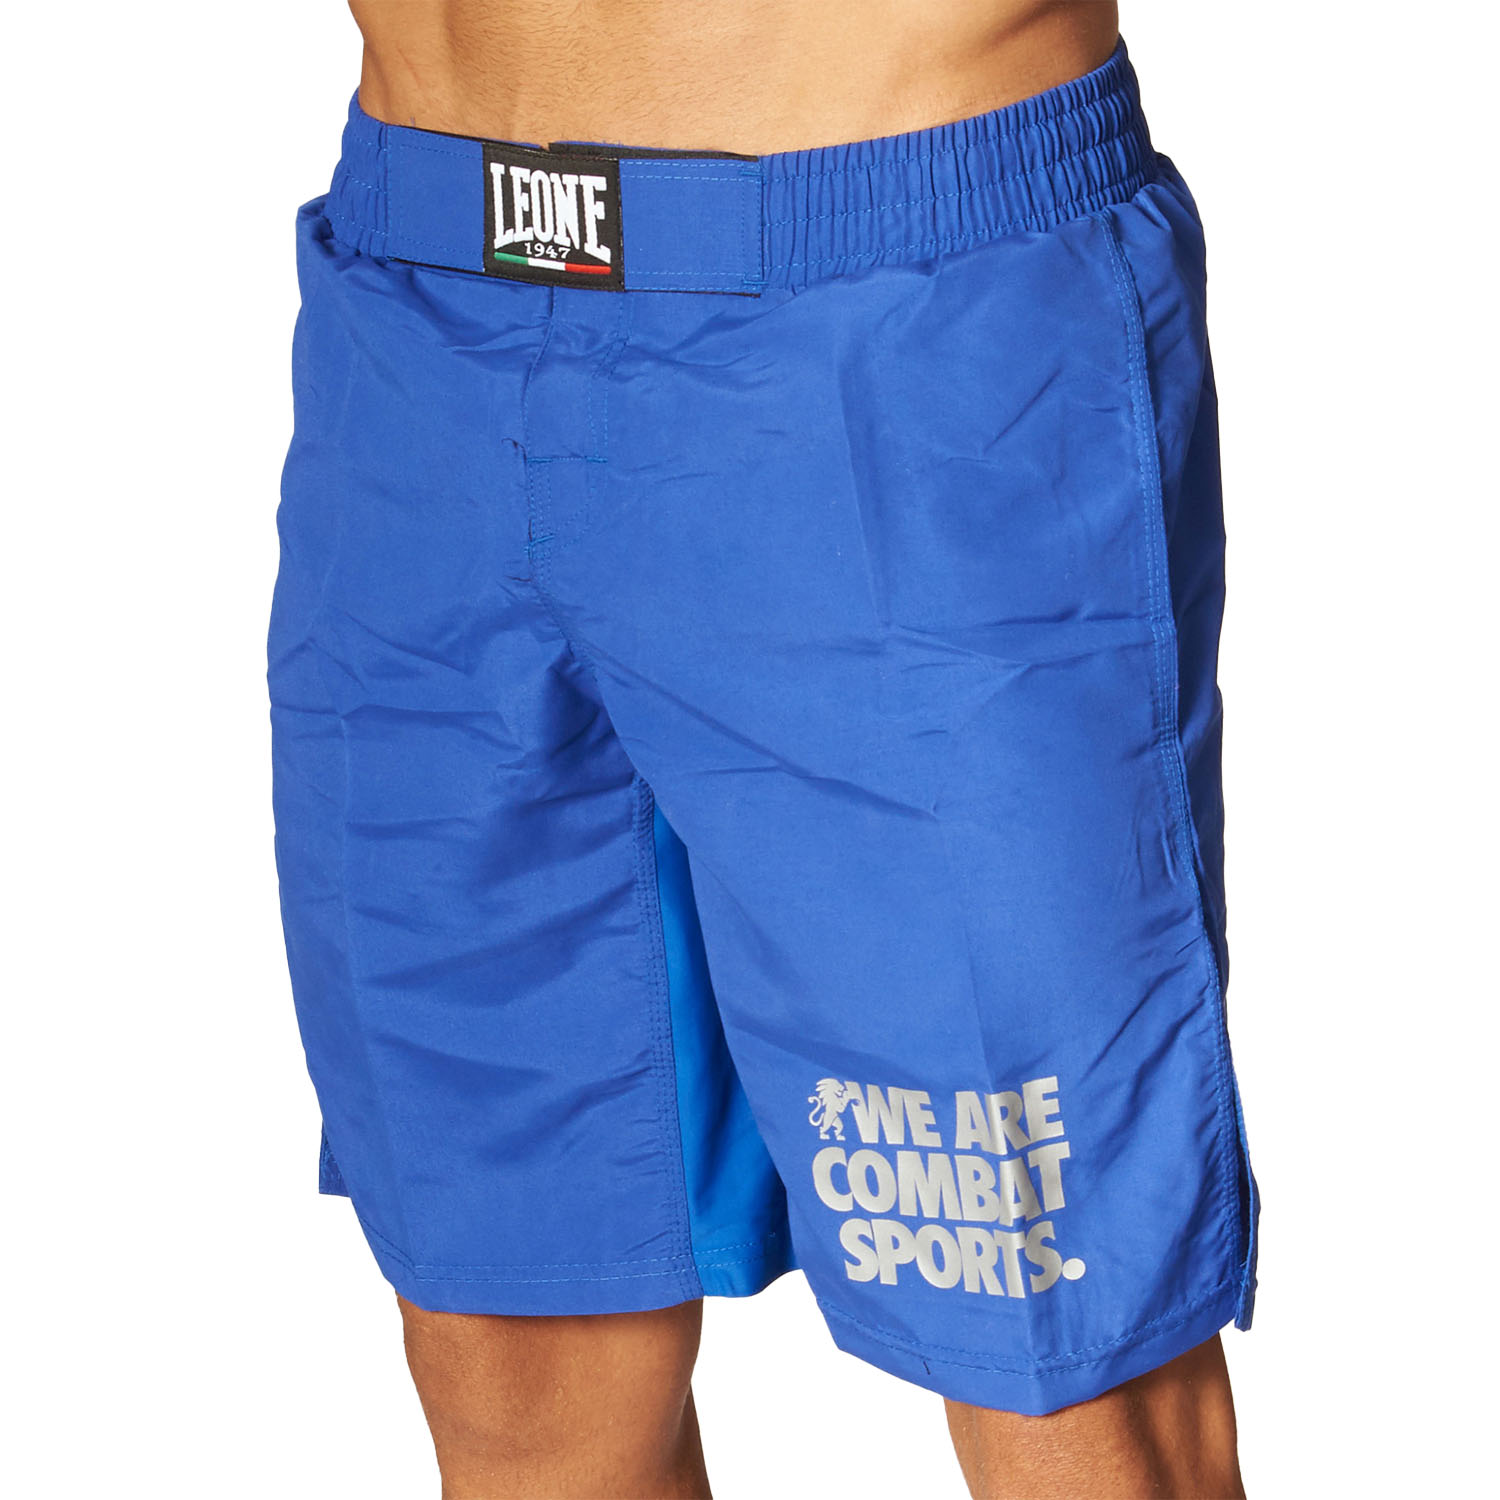 LEONE MMA Fight Shorts, Basic, AB795, blue, XL